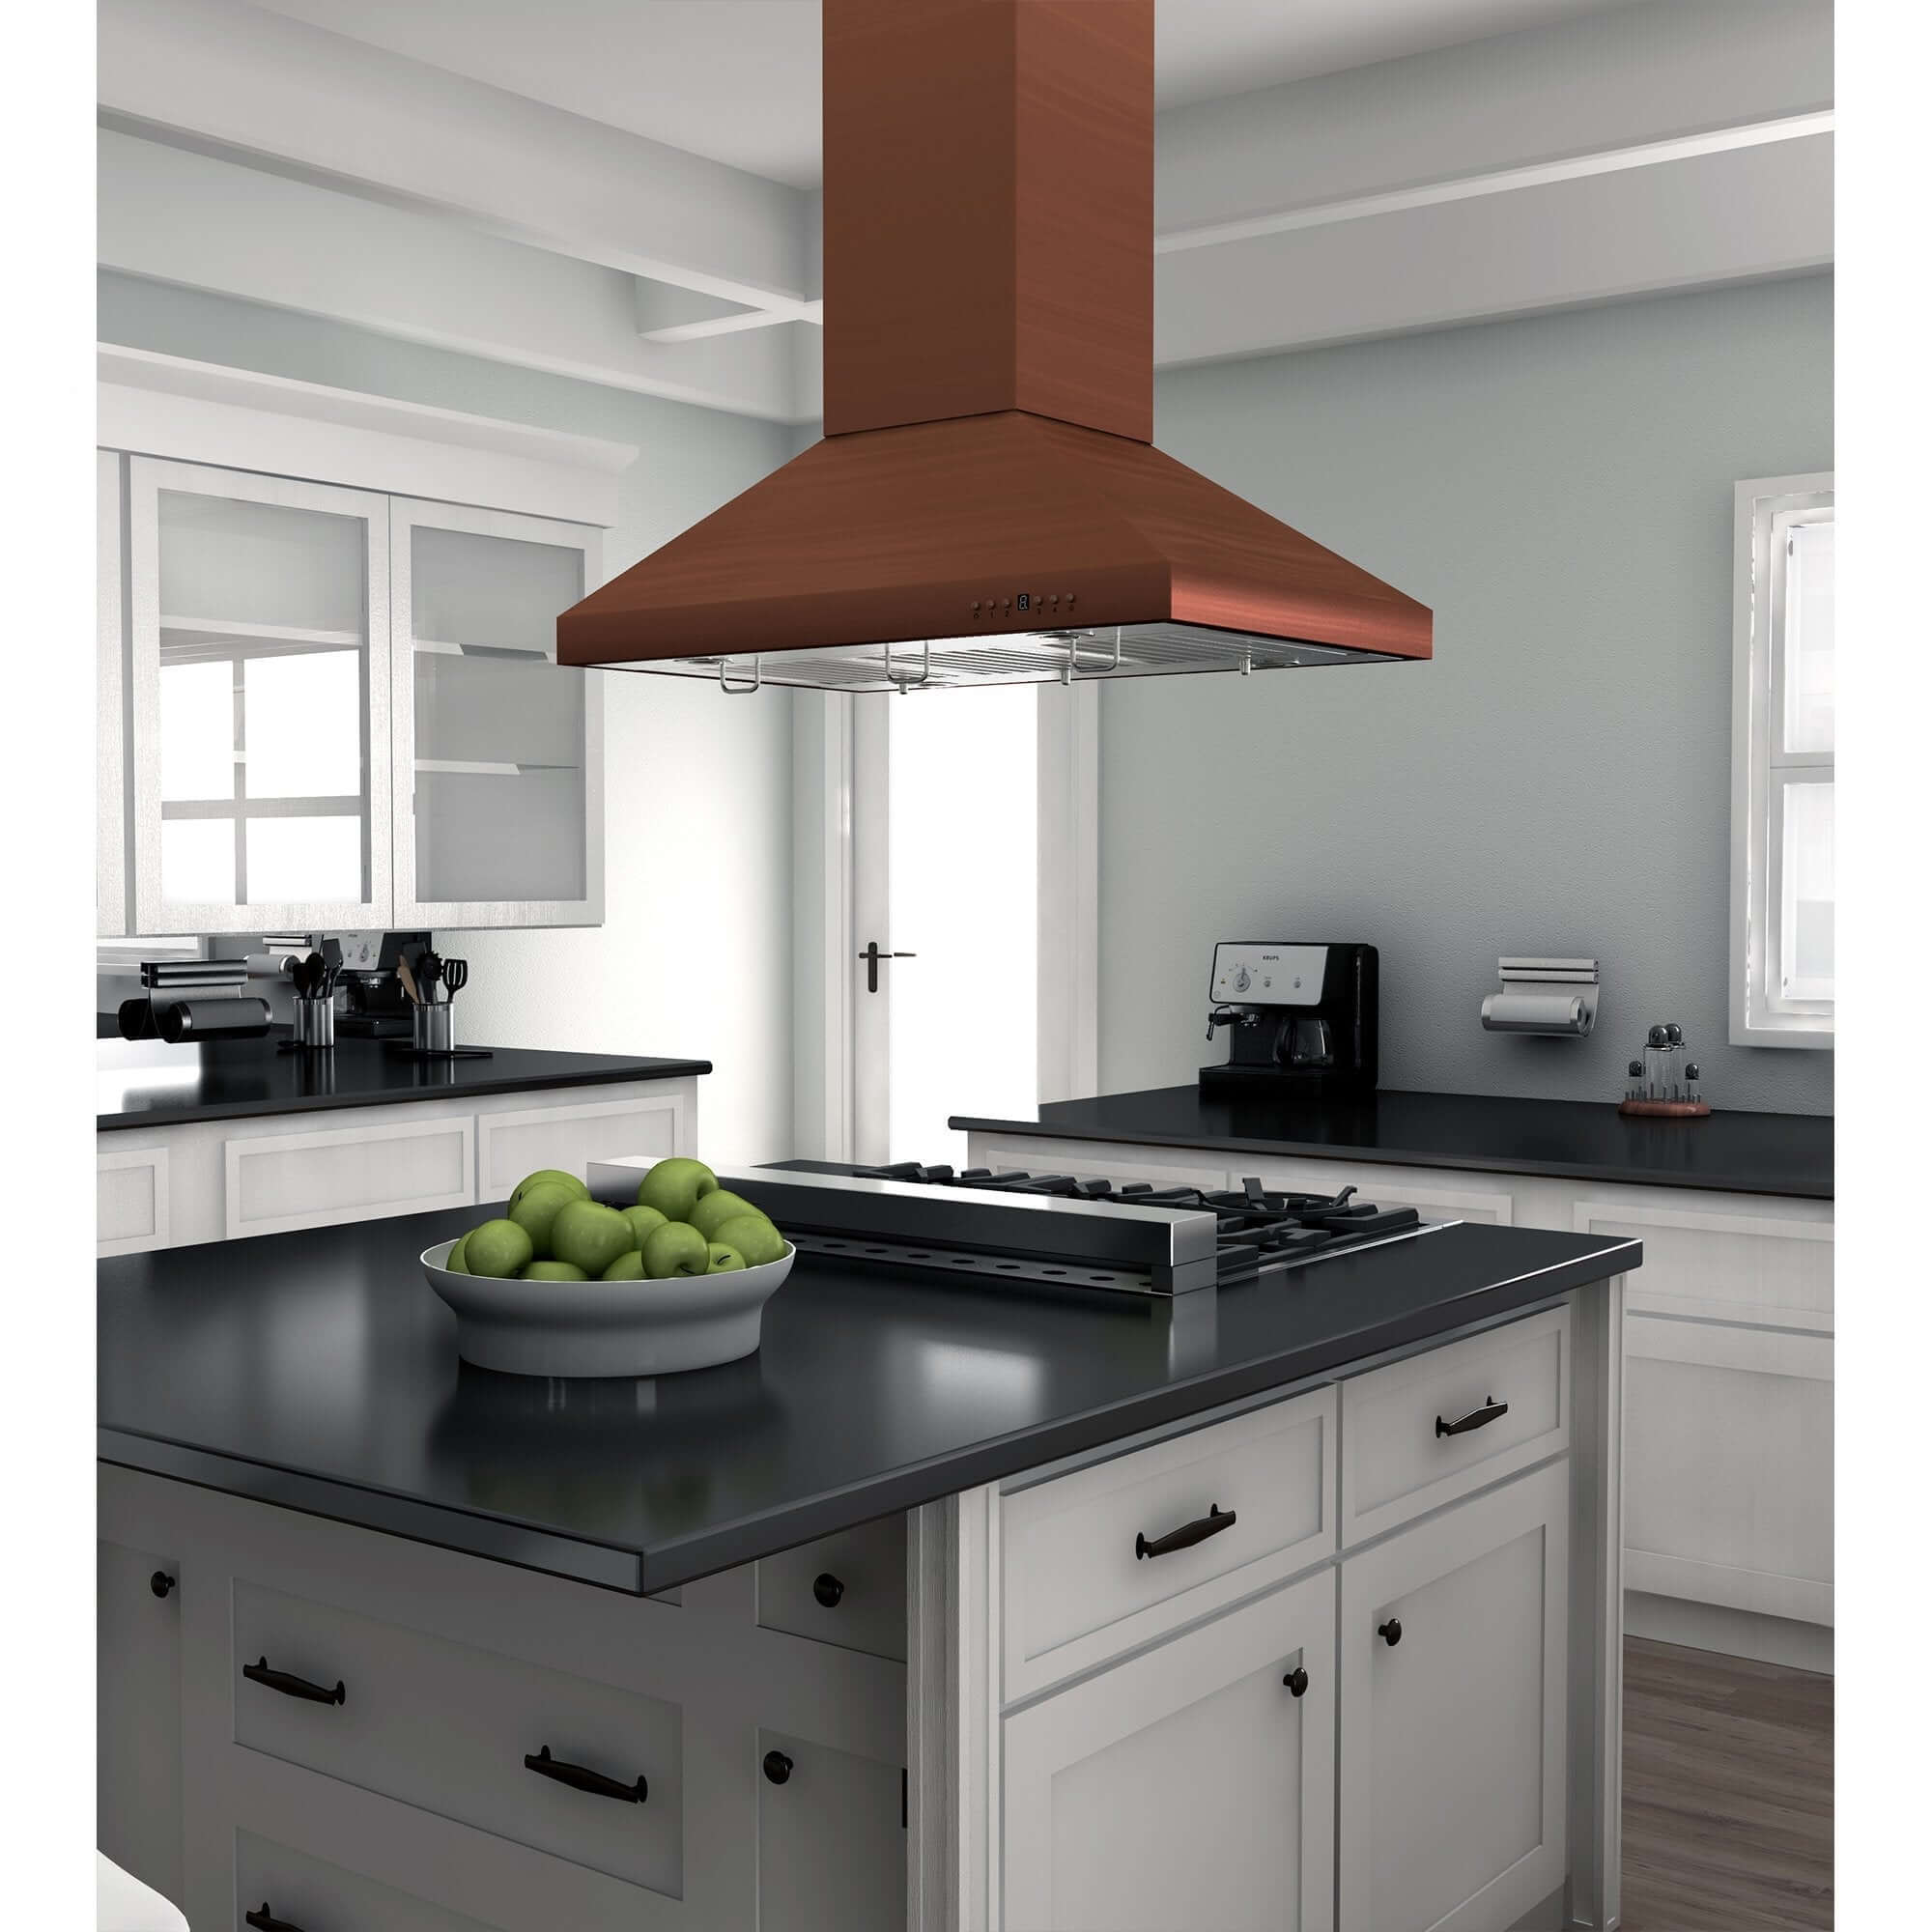 ZLINE 36 in. Designer Series Copper Island Mount Range Hood (8KL3iC-36) rendering in a modern kitchen wide angle.